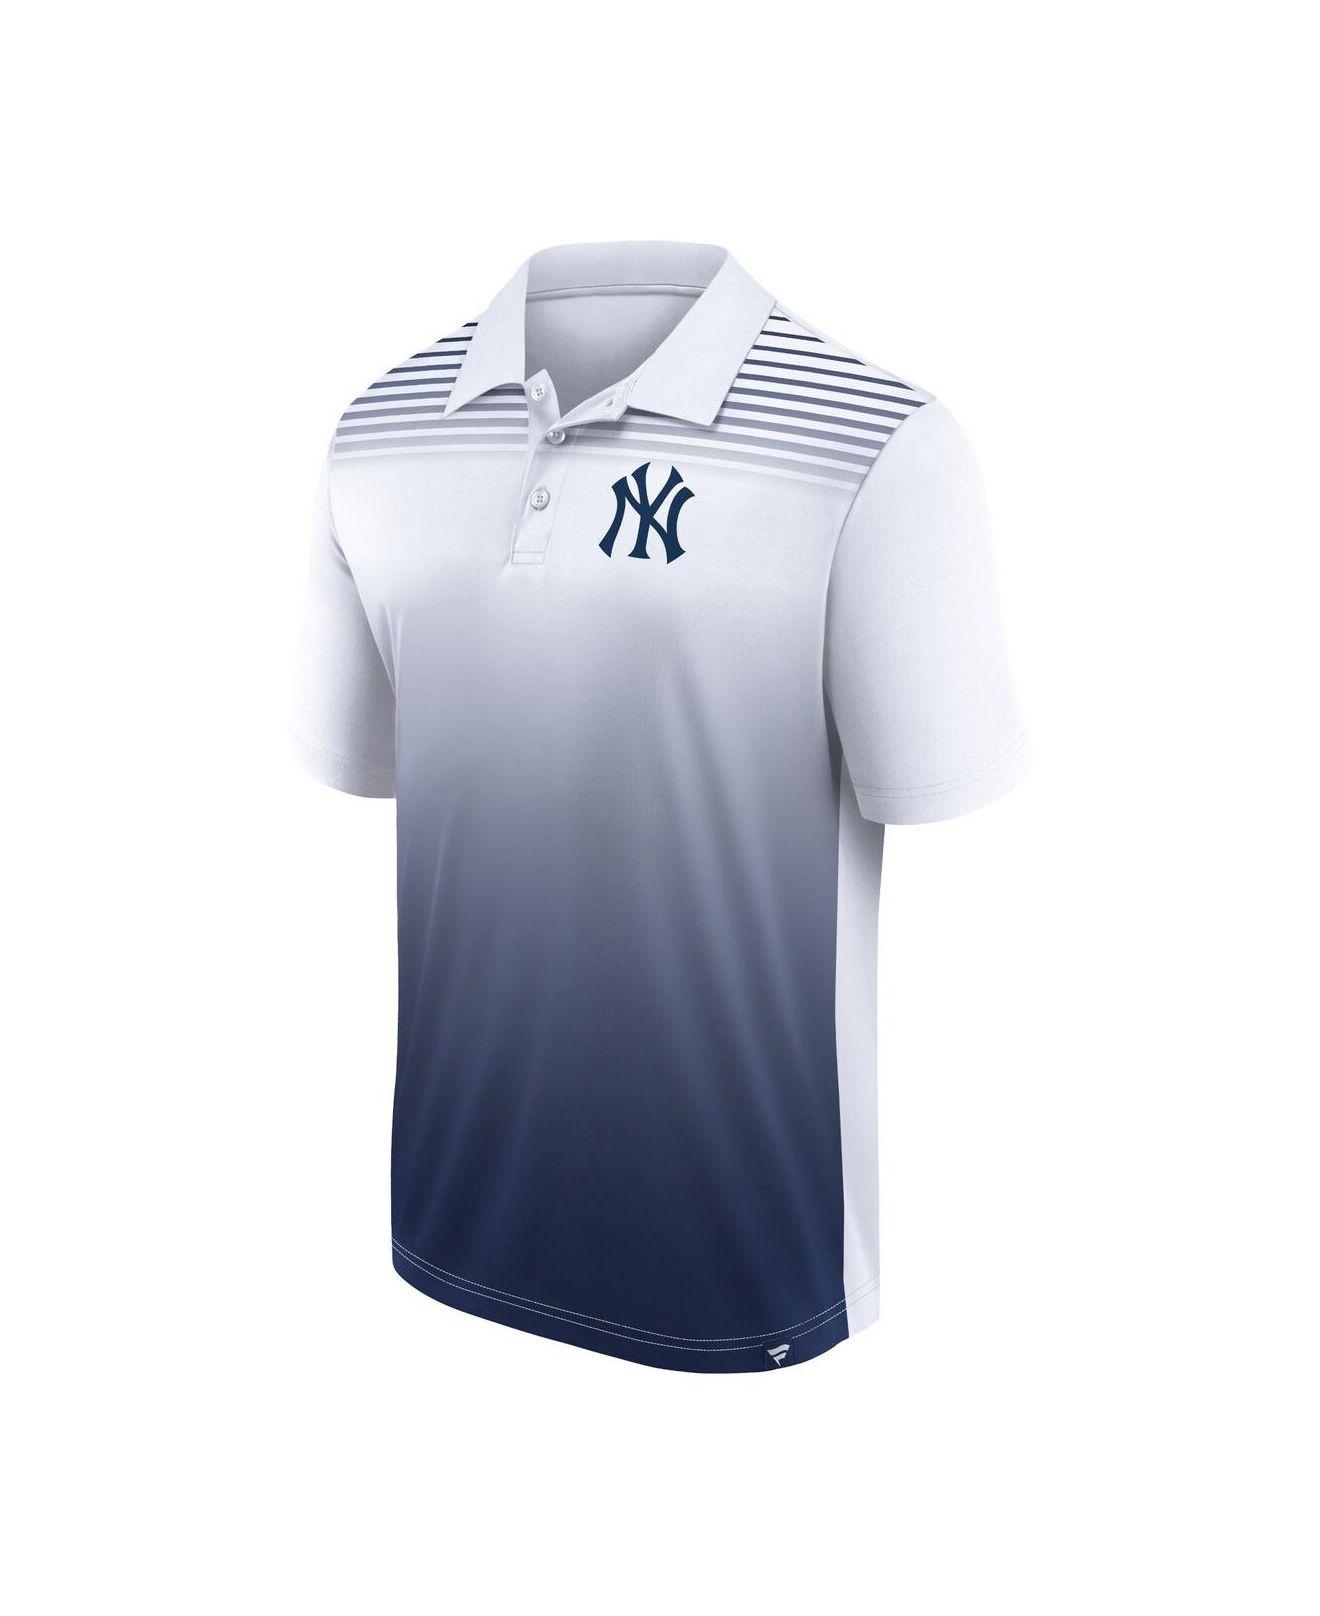 Fanatics Branded White, Navy New York Yankees Sandlot Game